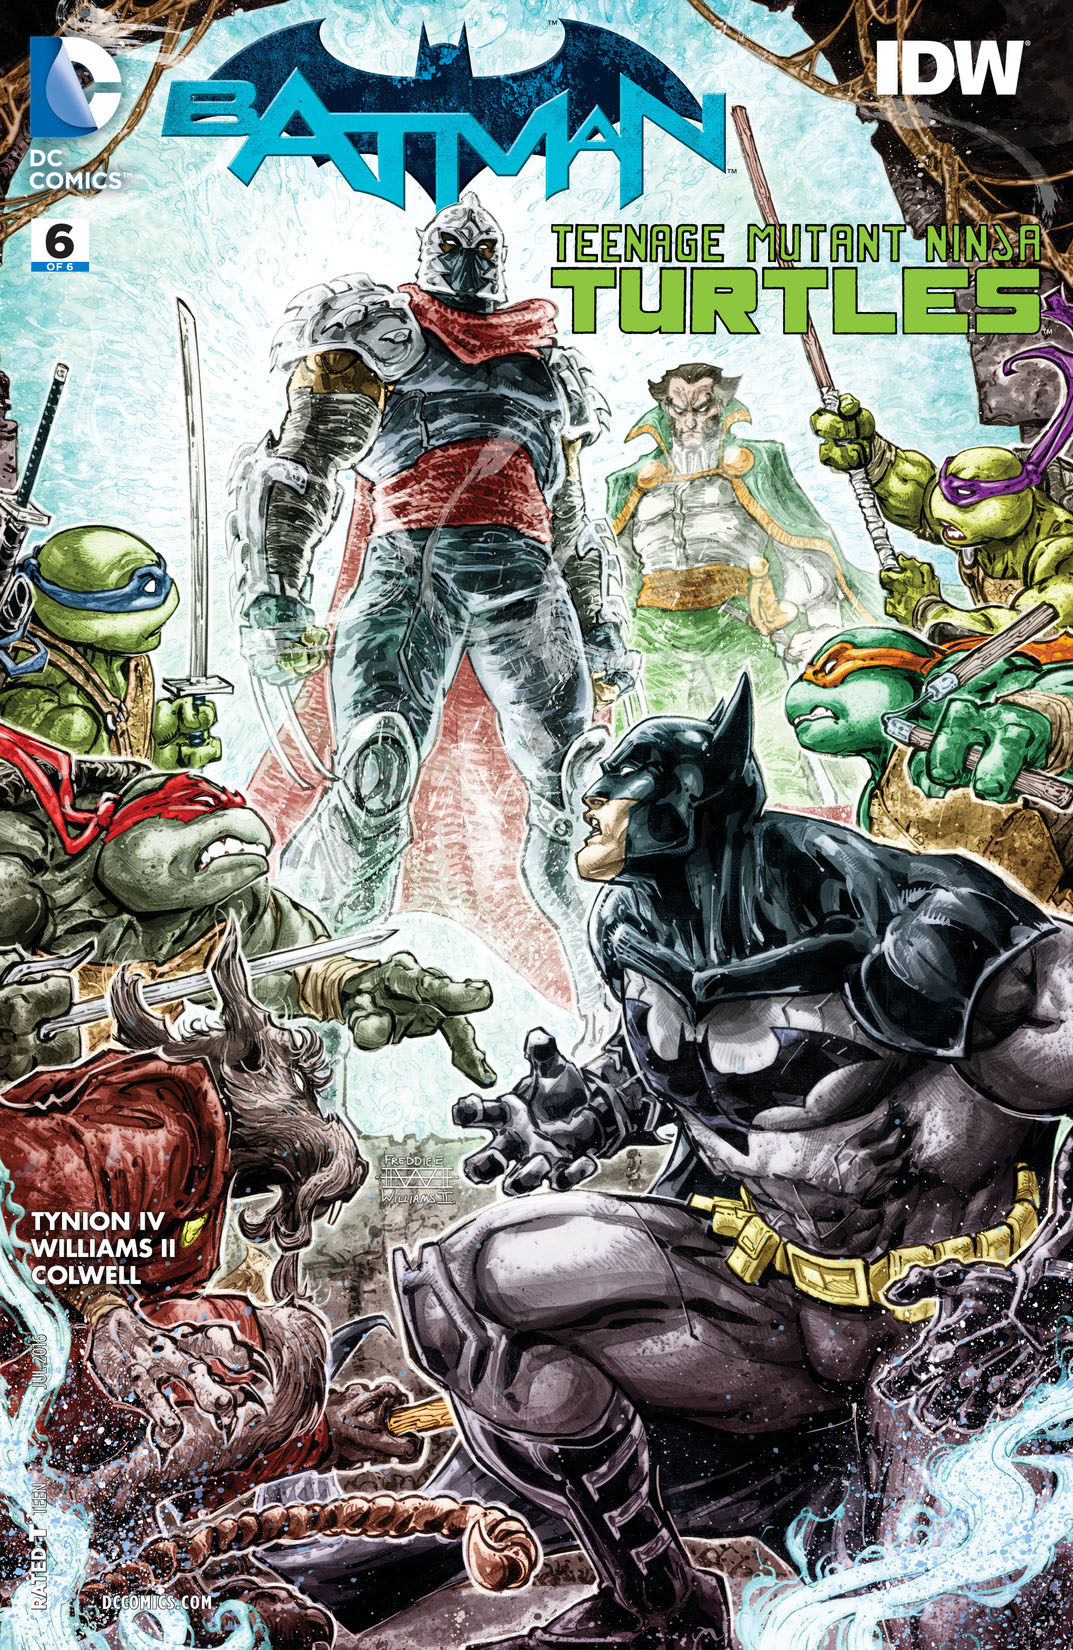 Batman/Teenage Mutant Ninja Turtles #6 preview images